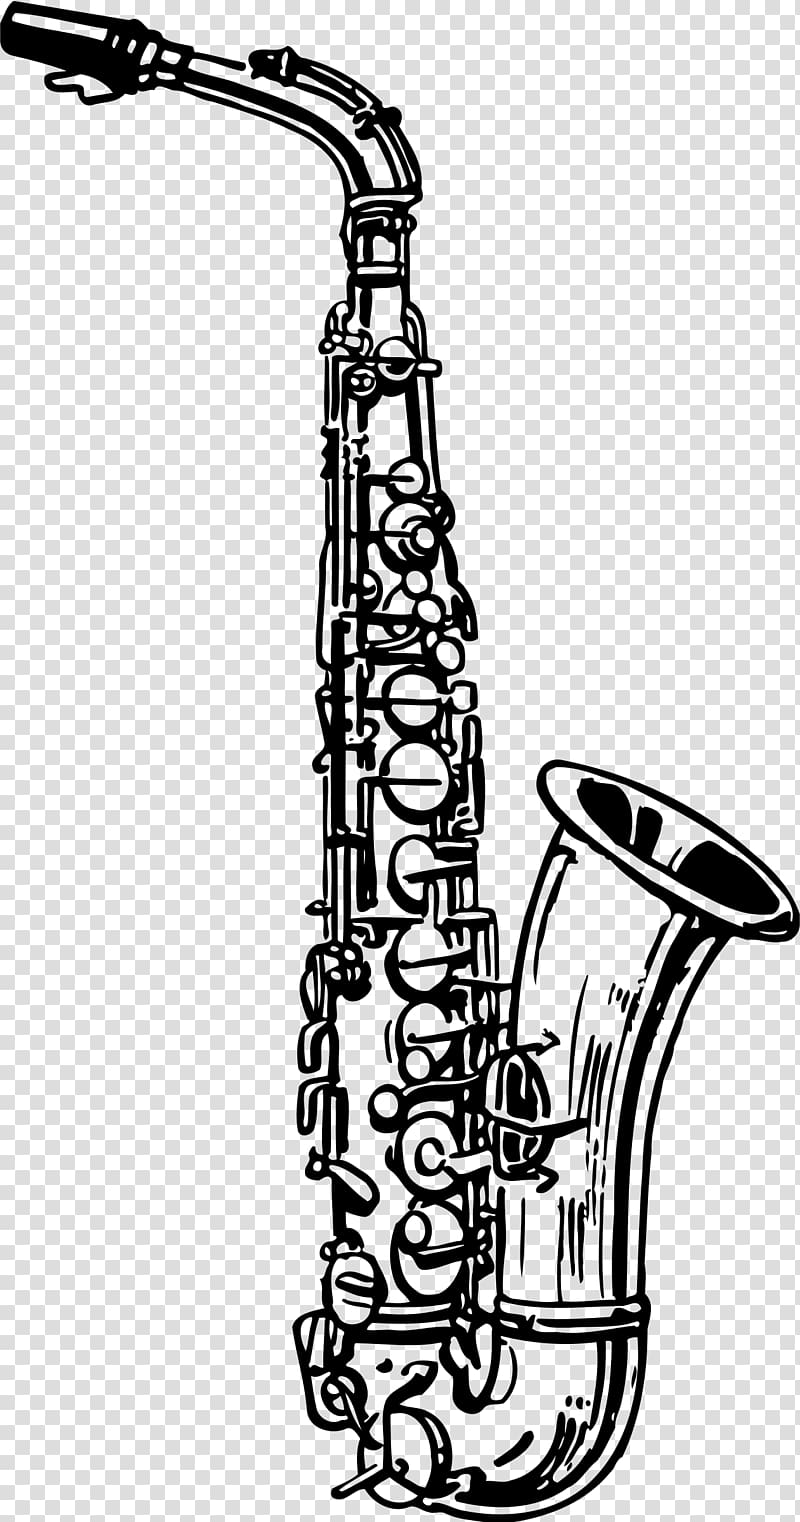 Clarinet clipart tenor sax, Clarinet tenor sax Transparent FREE for